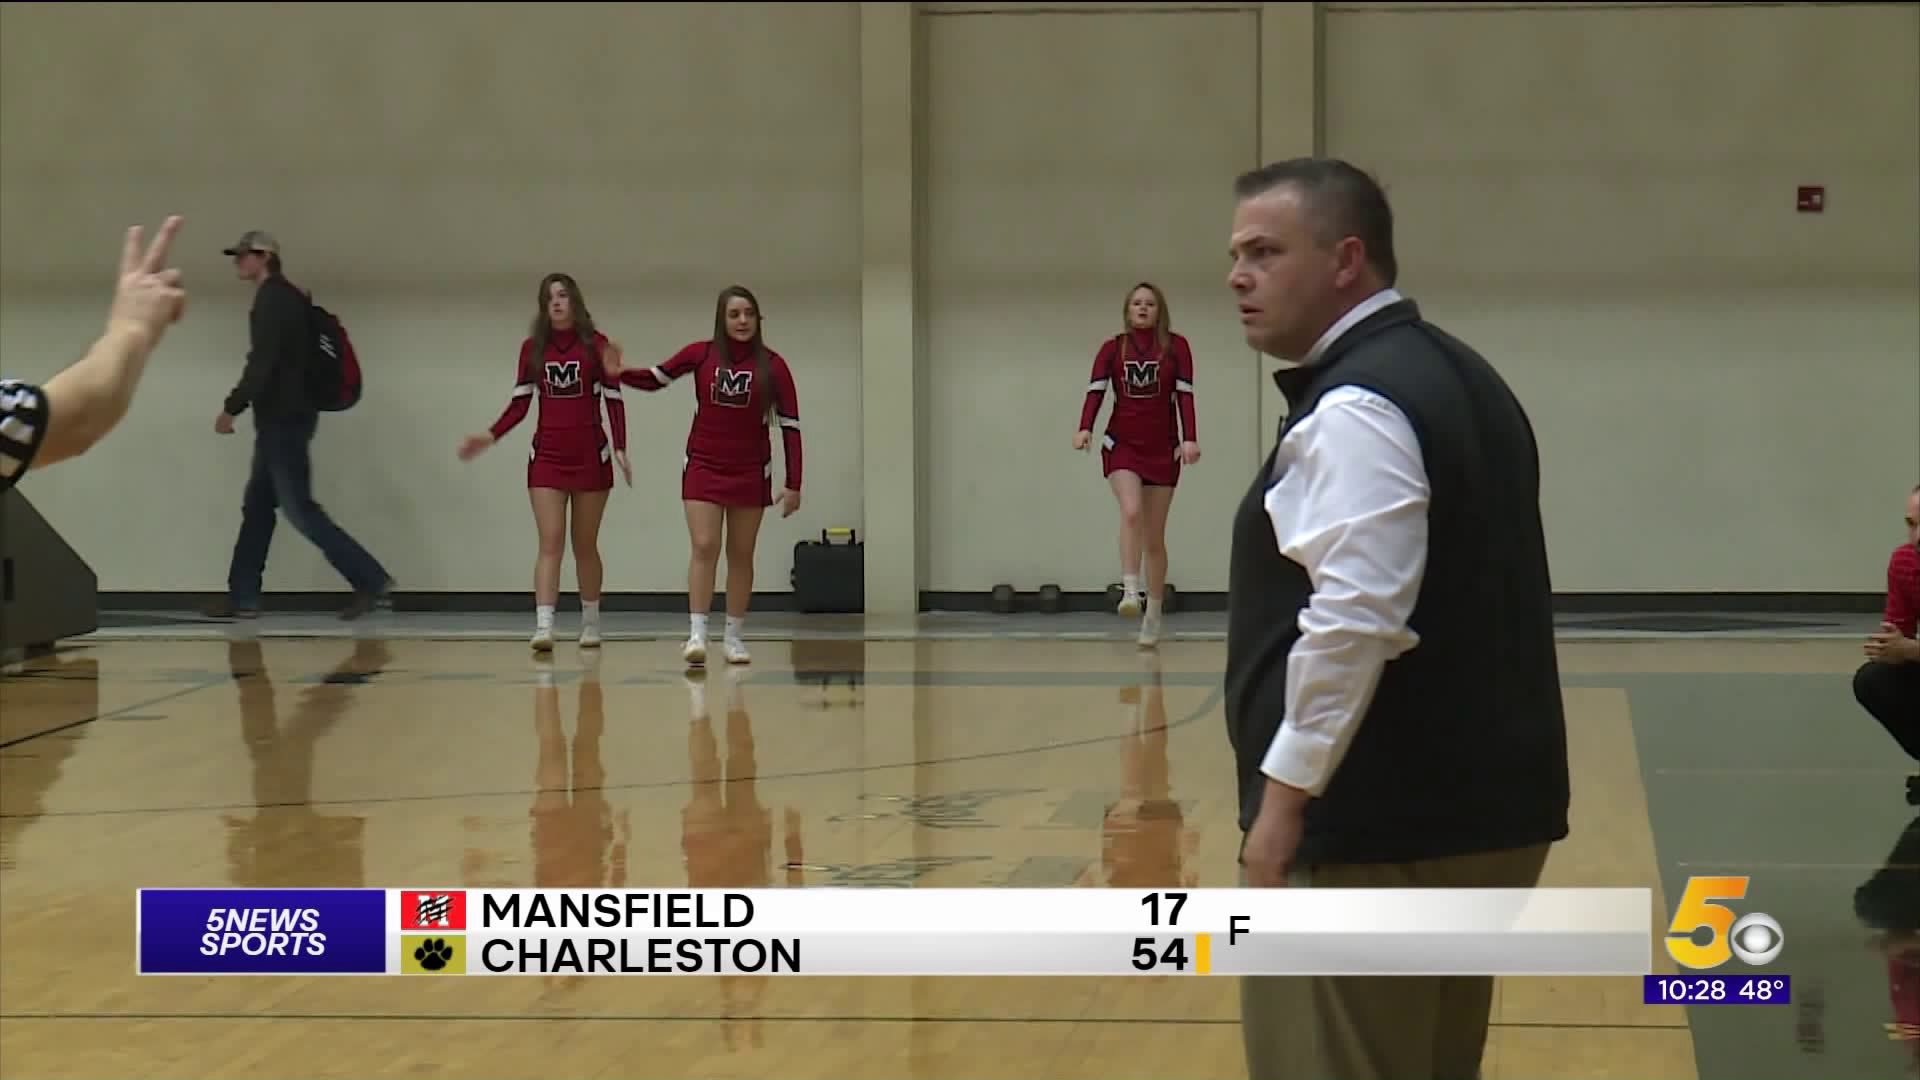 Charleston sweeps Mansfield